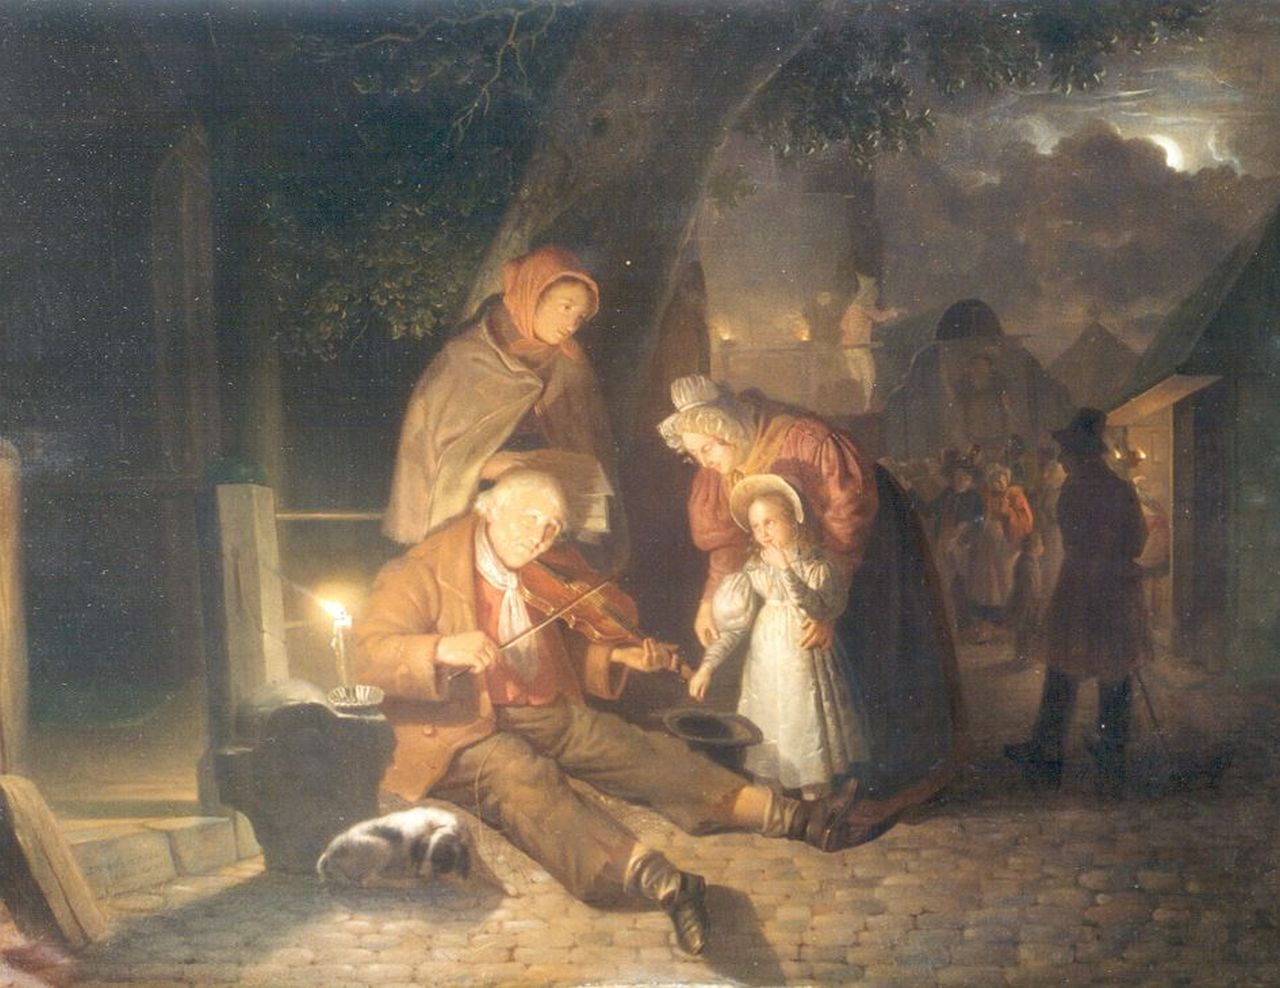 Grootvelt J.H. van | Jan Hendrik van Grootvelt, A Street Musician, oil on panel 44.5 x 57.3 cm, signed l.l. and dated 1835